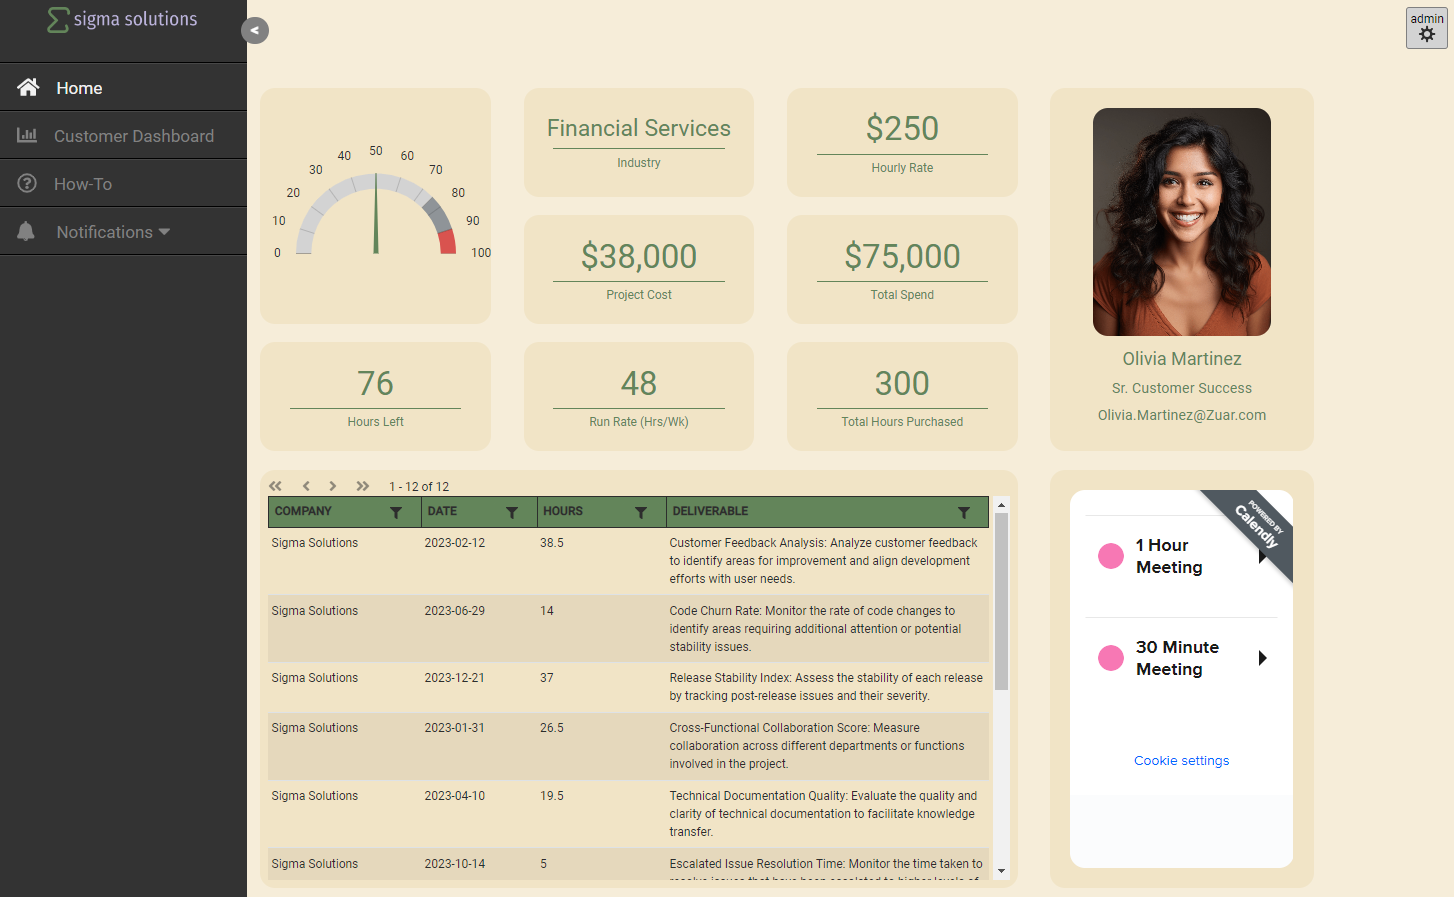 Customer Service Analytics Dashboard Through Zuar Portal